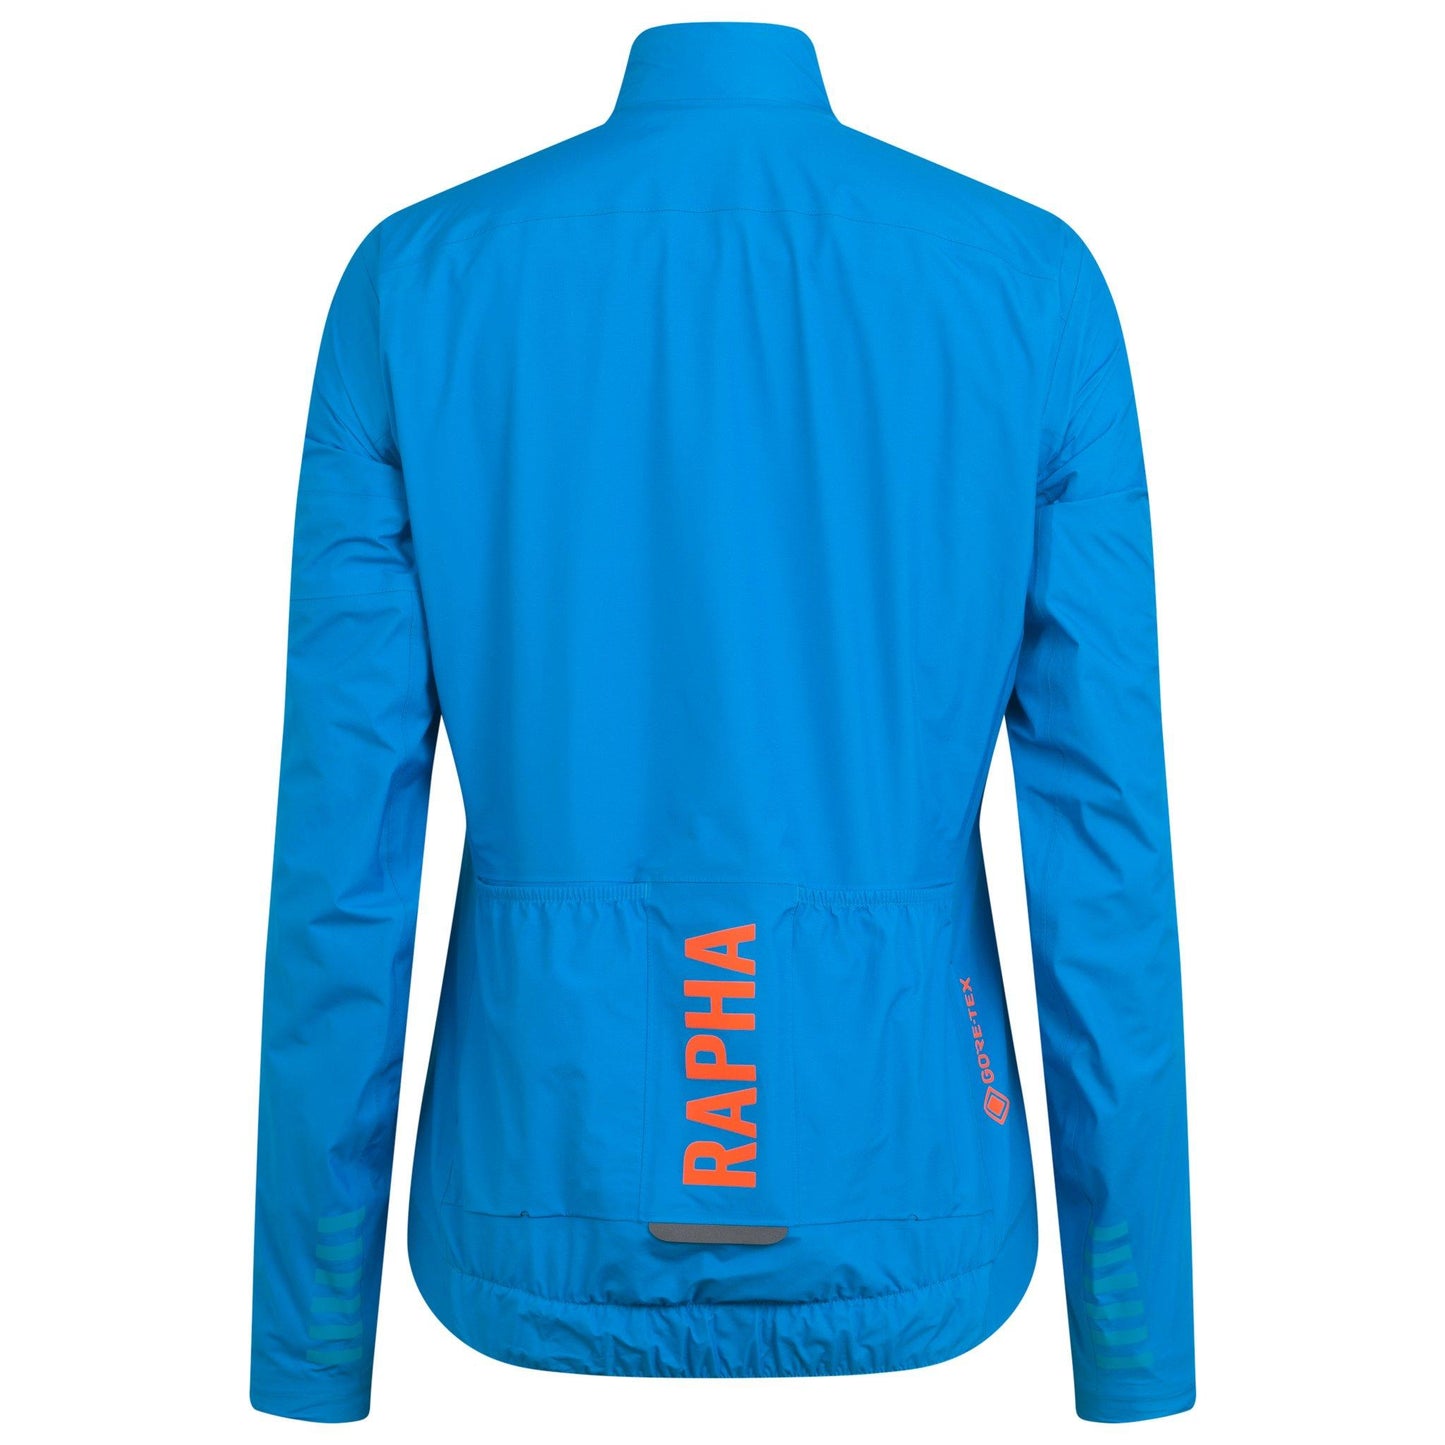 Rapha Women's Pro Team Gore-Tex Insulated Jacket, Blue/Orange